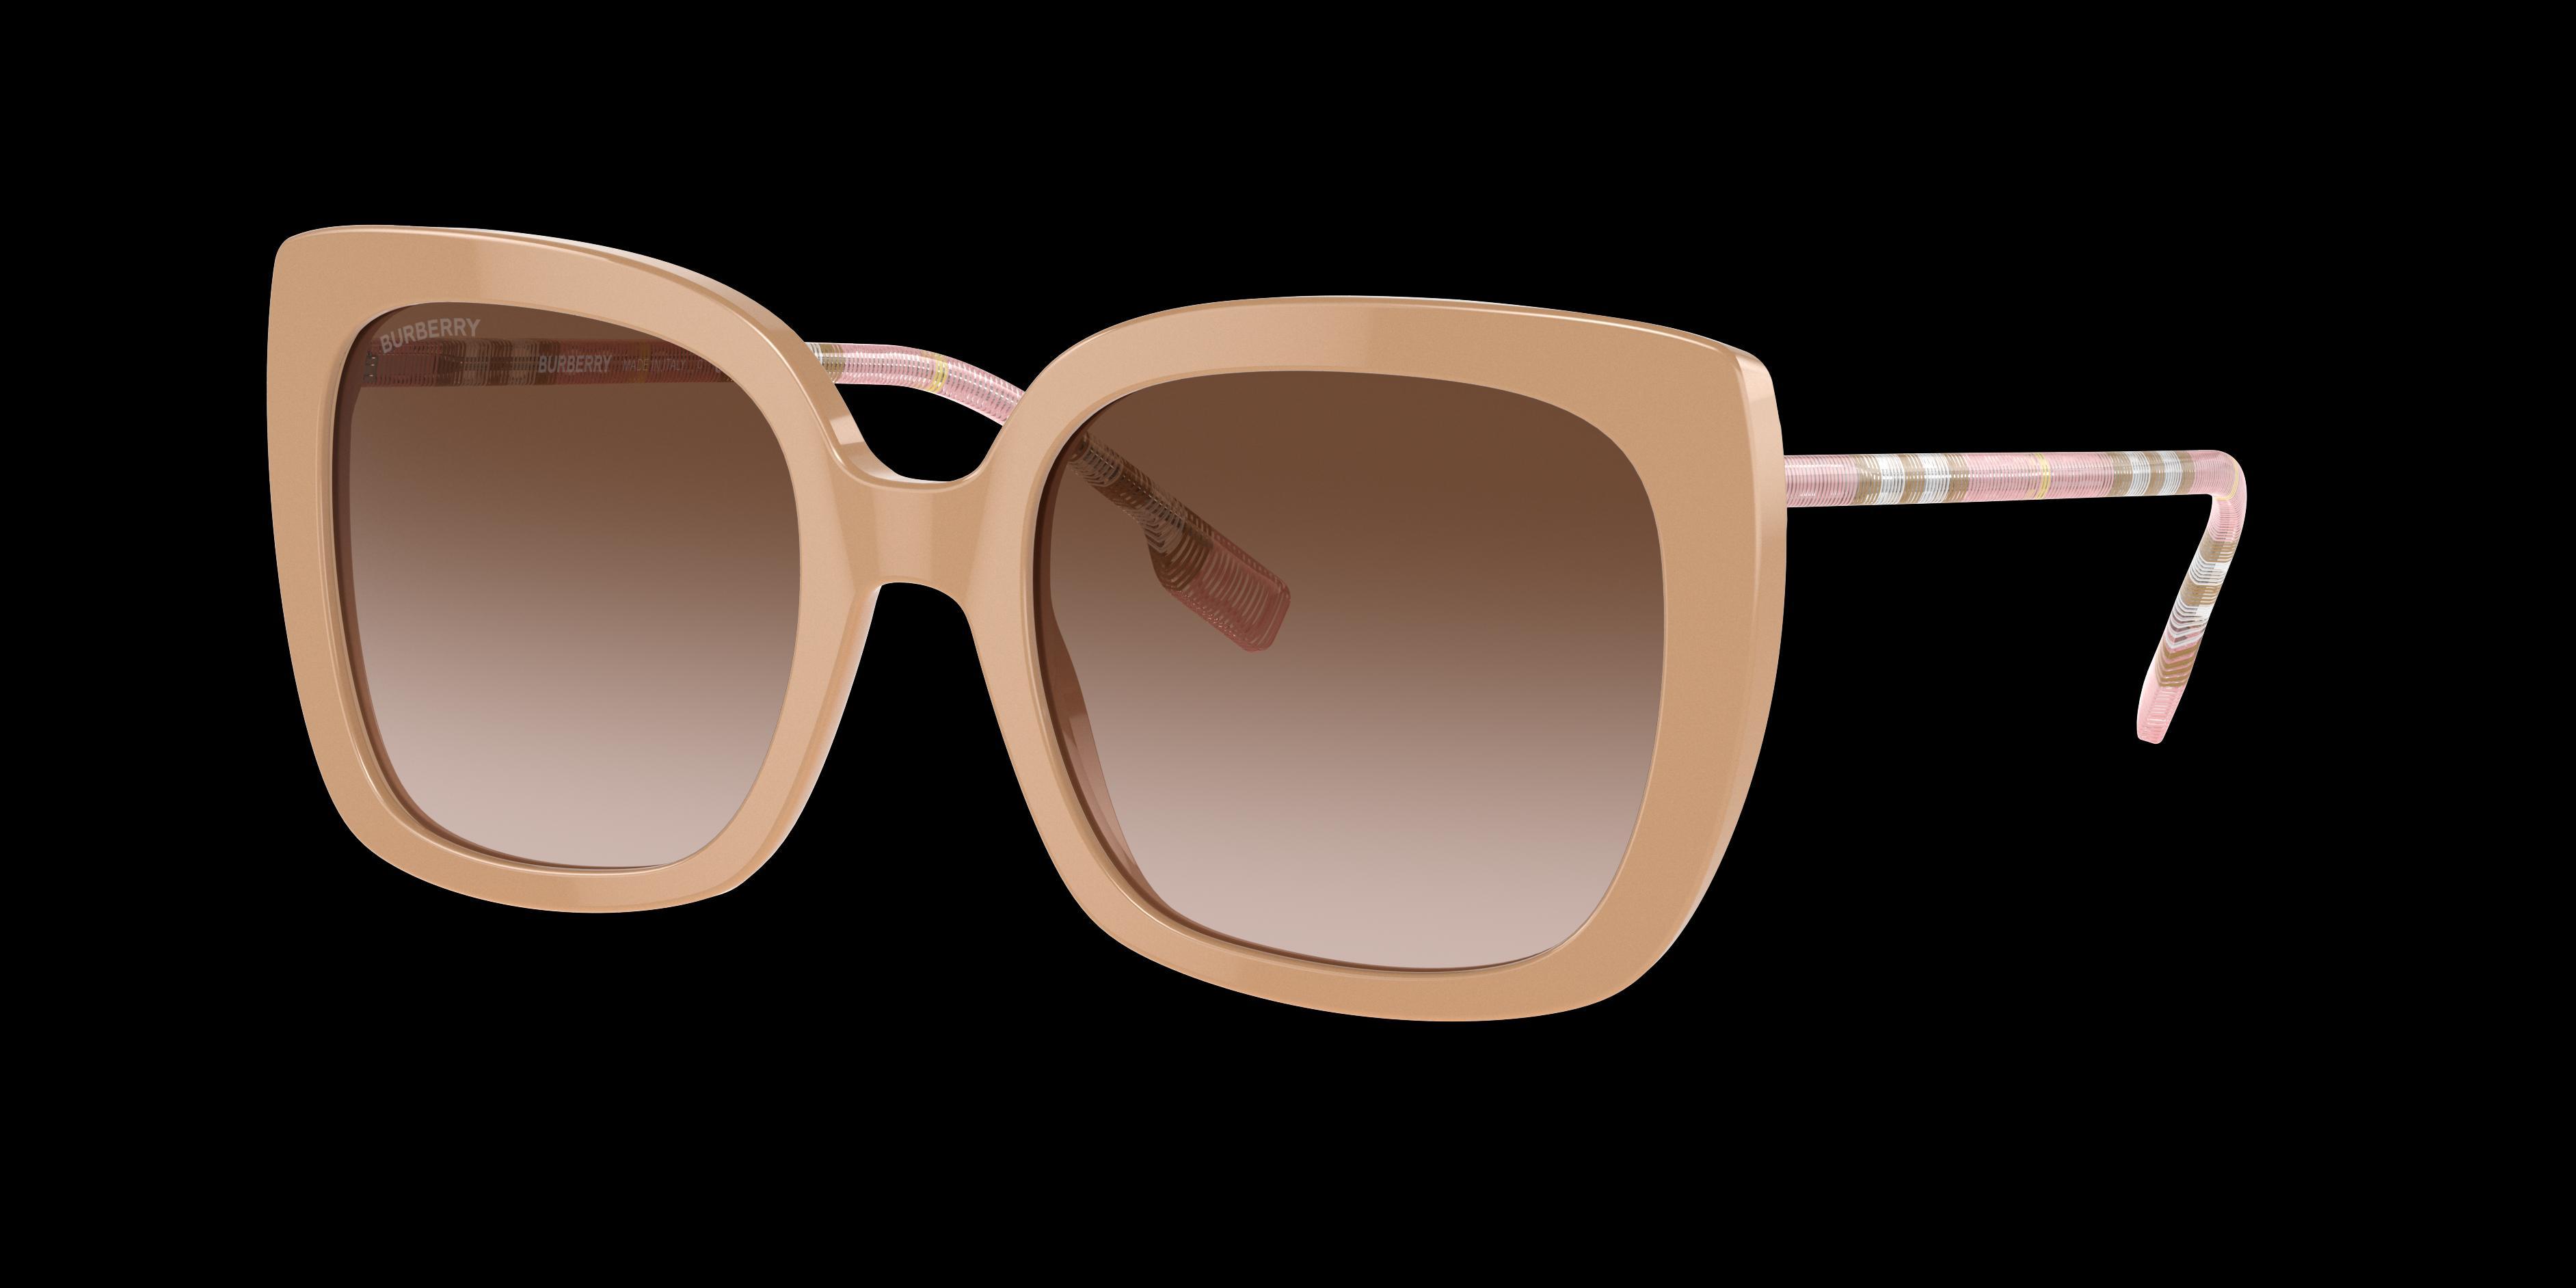 burberry 54mm Gradient Square Sunglasses Product Image